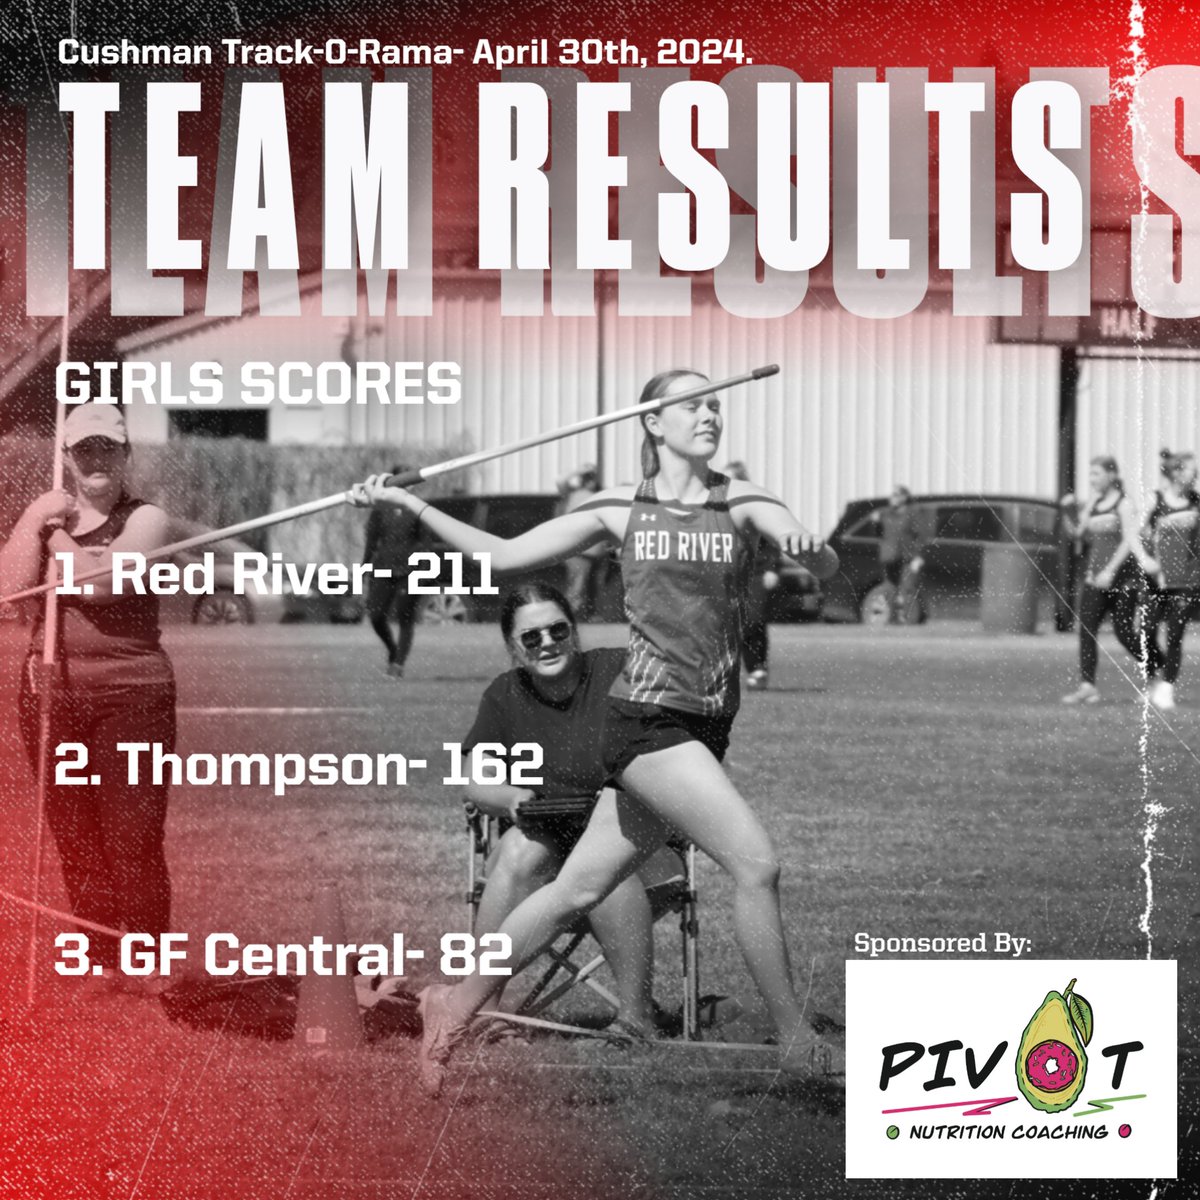 4.30.24- Cushman Track-O-Rama Team Results. @RRHSactivities SPONSOR INFORMATION- Pivot Nutrition.